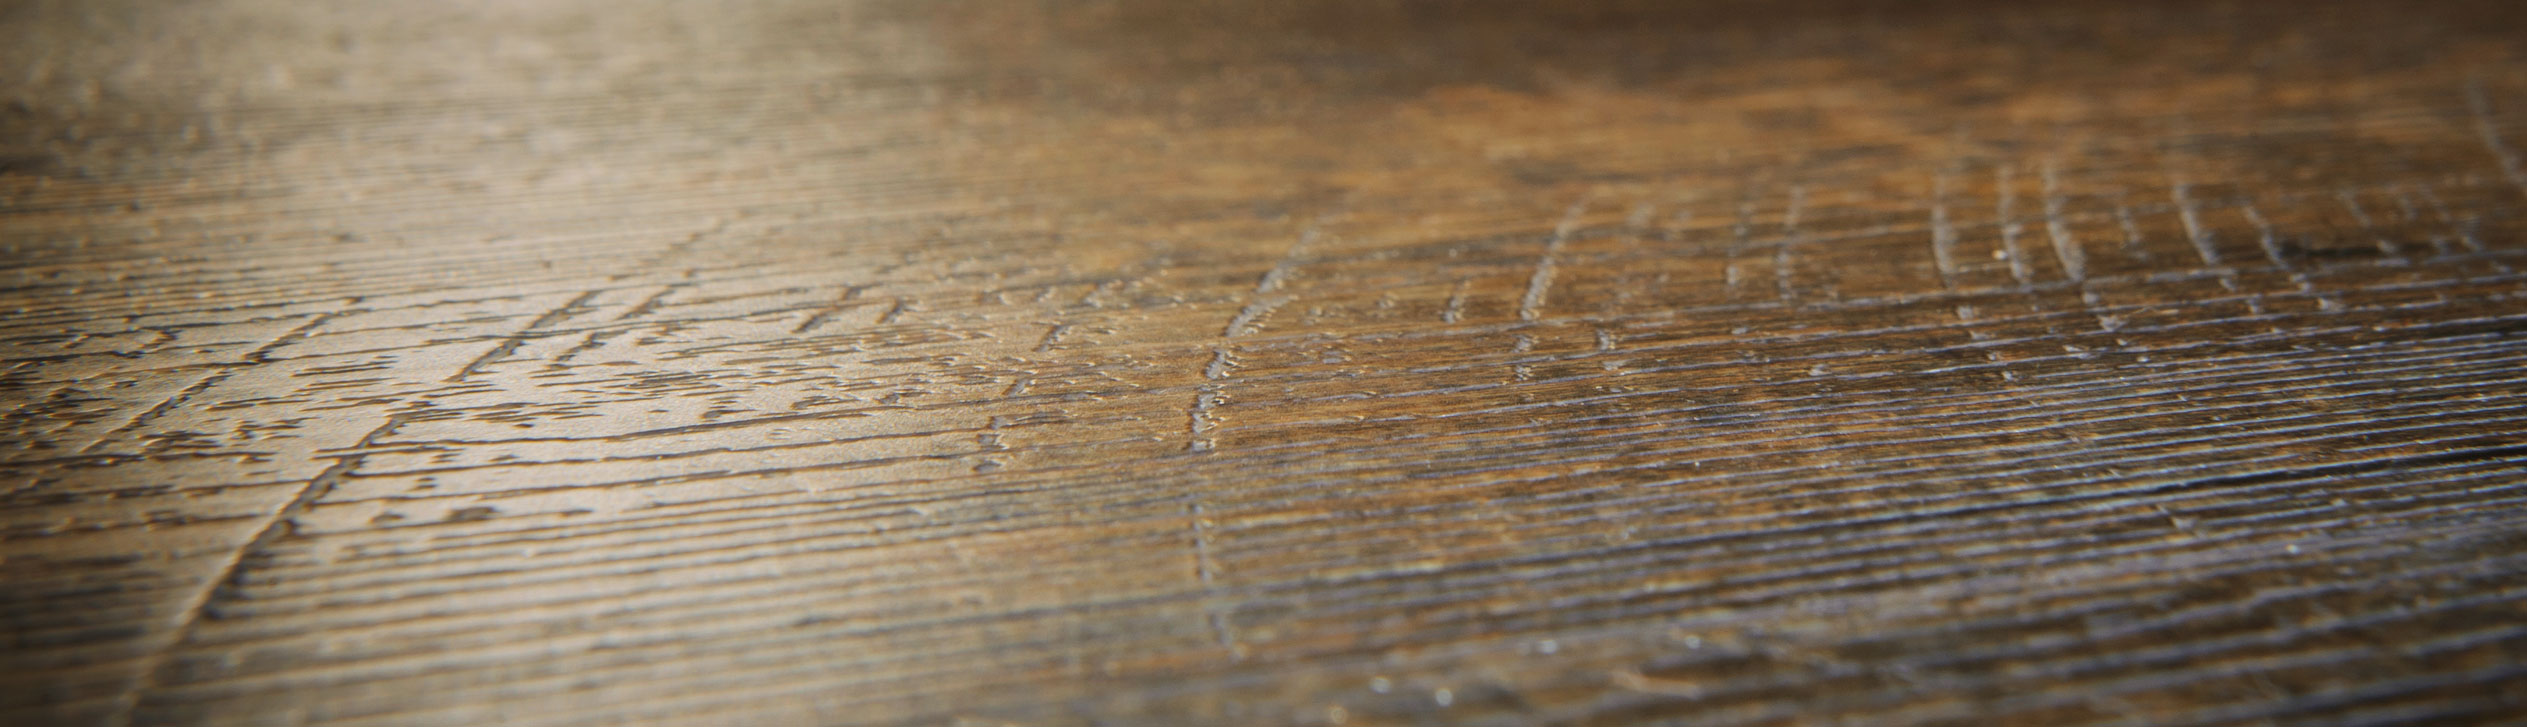 Designer Choice Flooring in Reclaimed Wood Vinyl Plank Close-Up